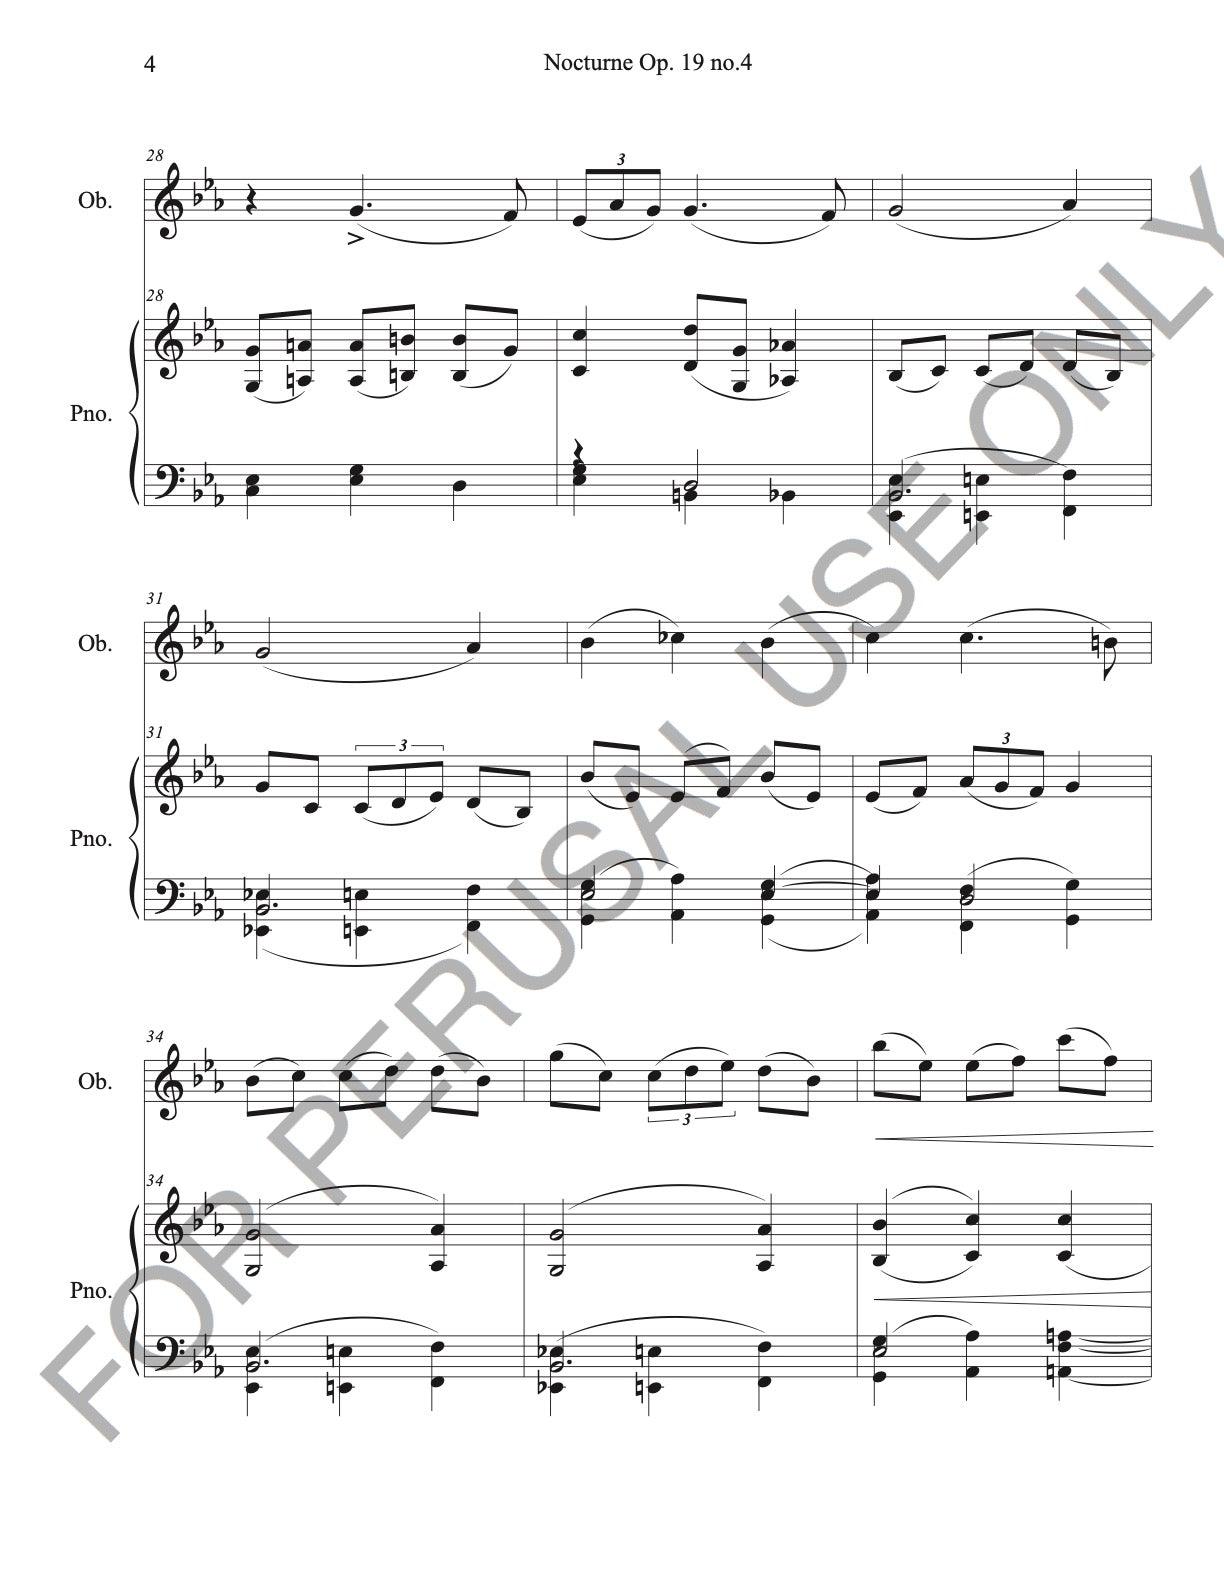 Oboe and Piano sheet music: Tchaikovsky's Nocturne, Op. 19 - ChaipruckMekara